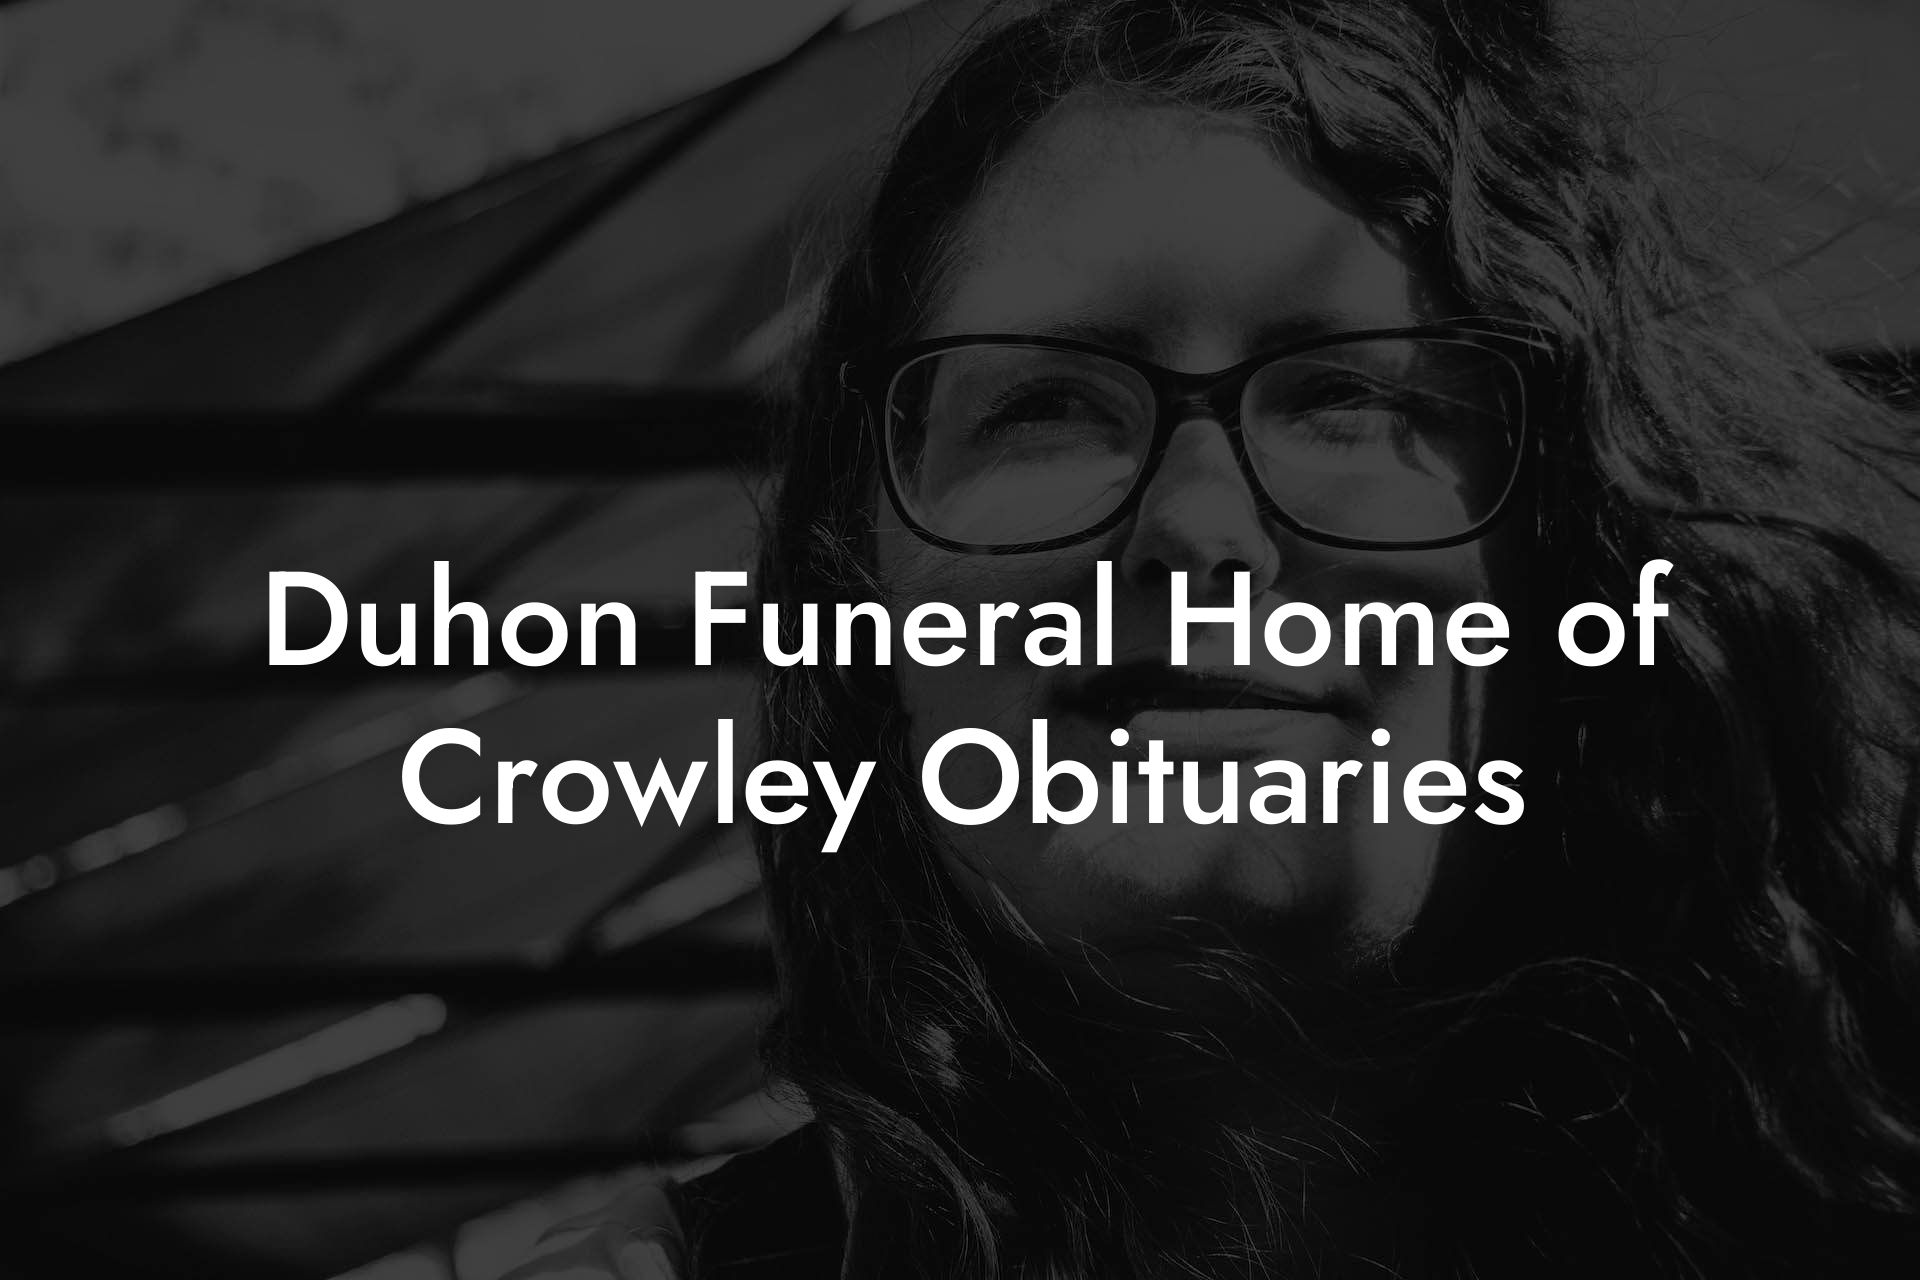 Duhon Funeral Home of Crowley Obituaries